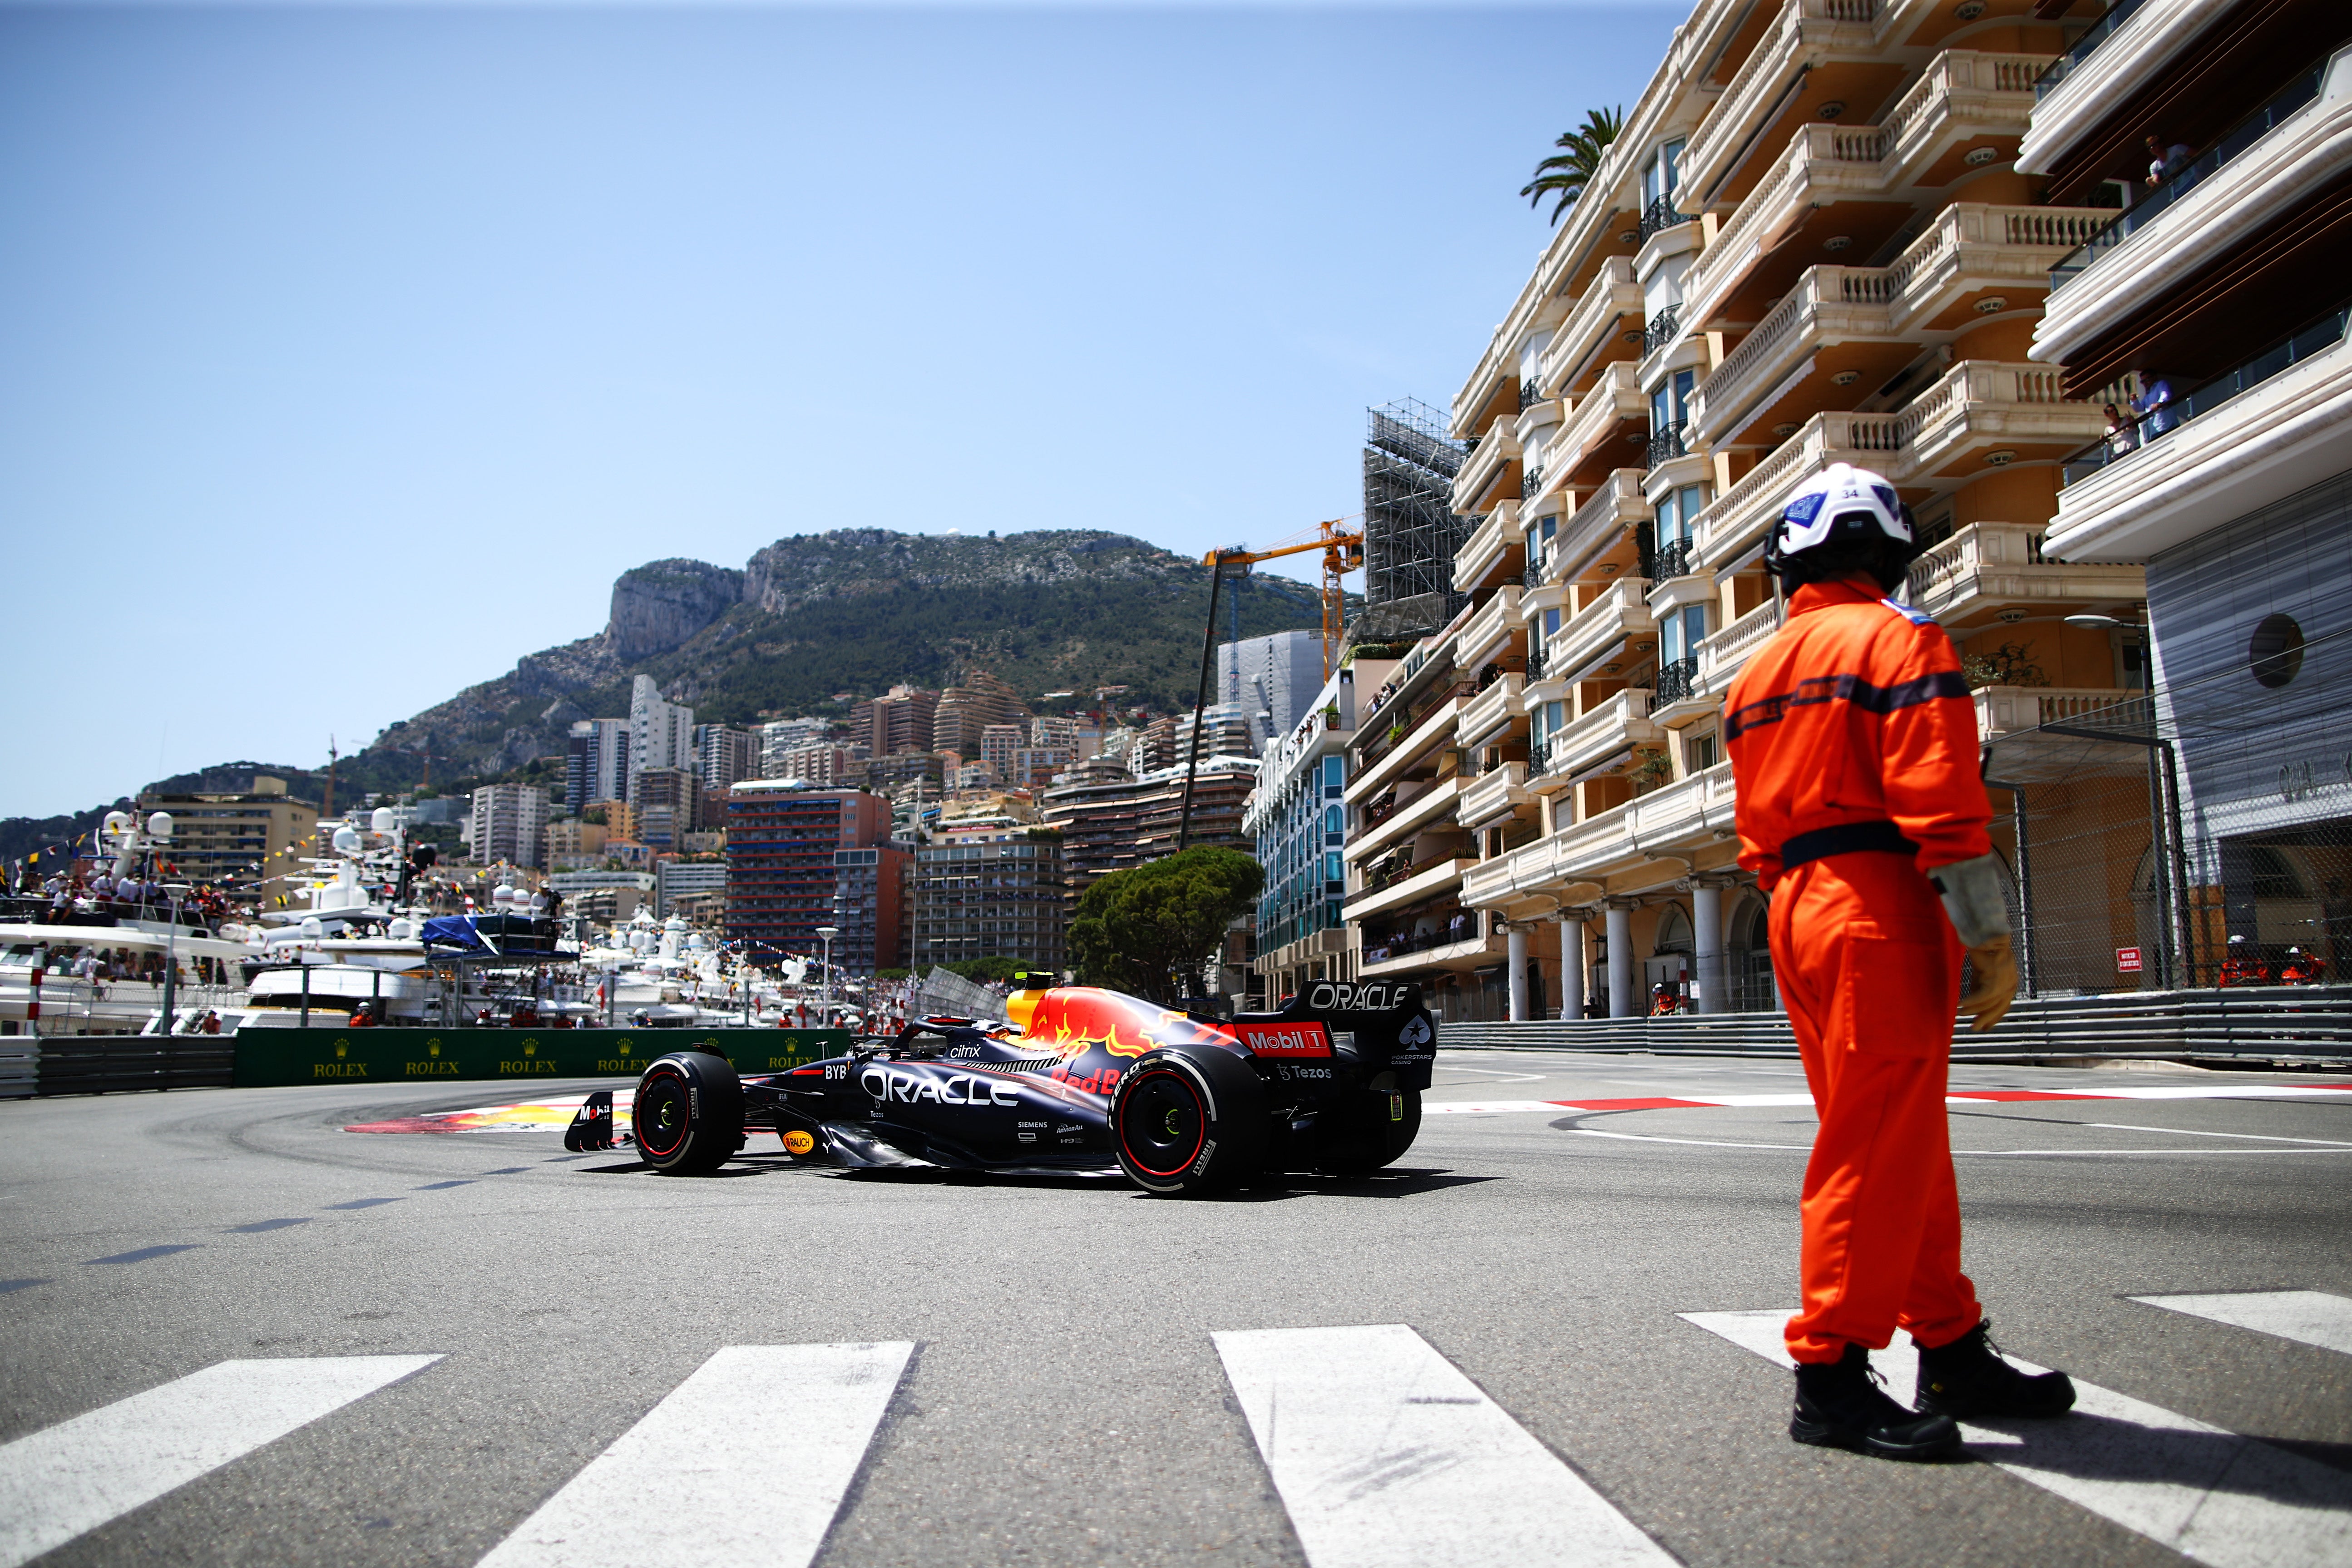 Monaco hosts the next F1 race of the season